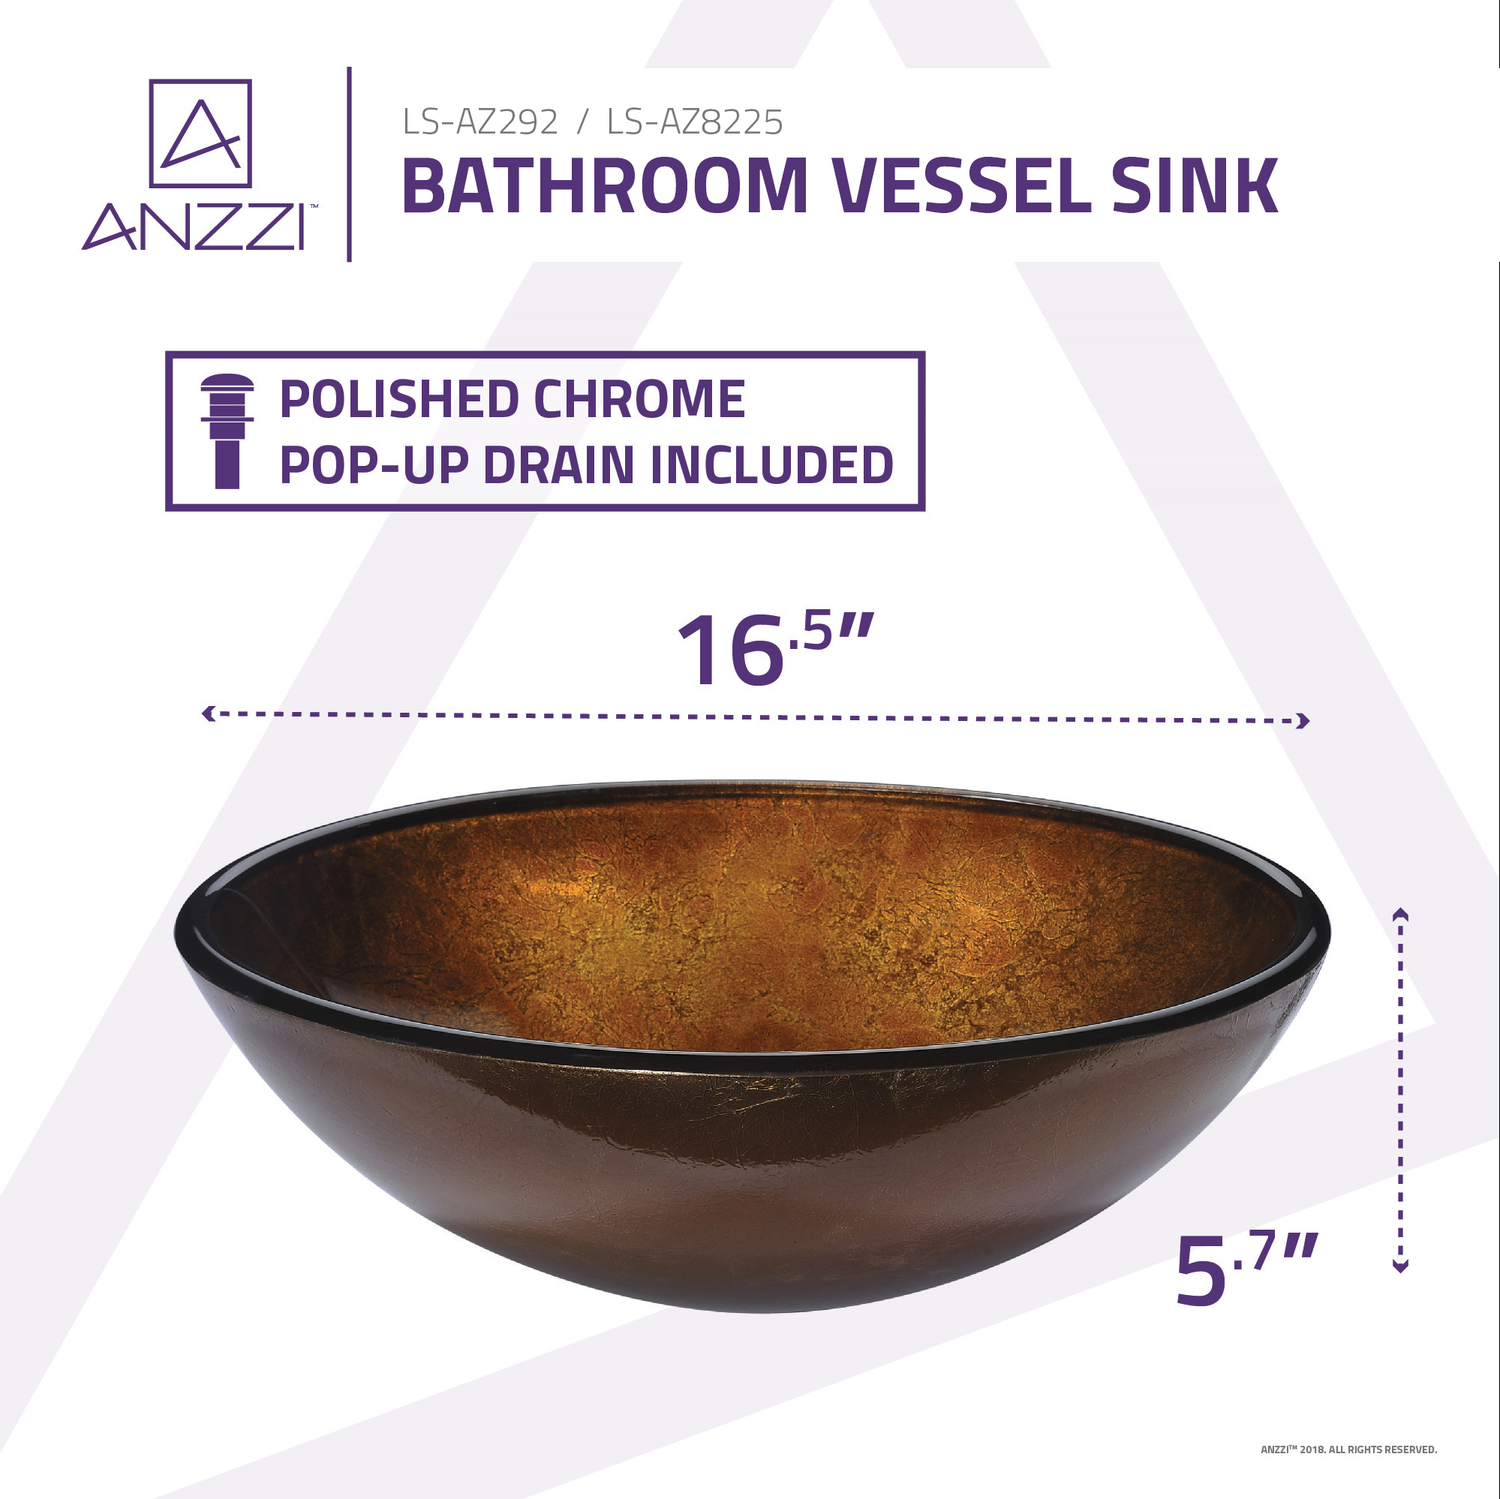 raised sink Anzzi BATHROOM - Sinks - Vessel - Tempered Glass Gold